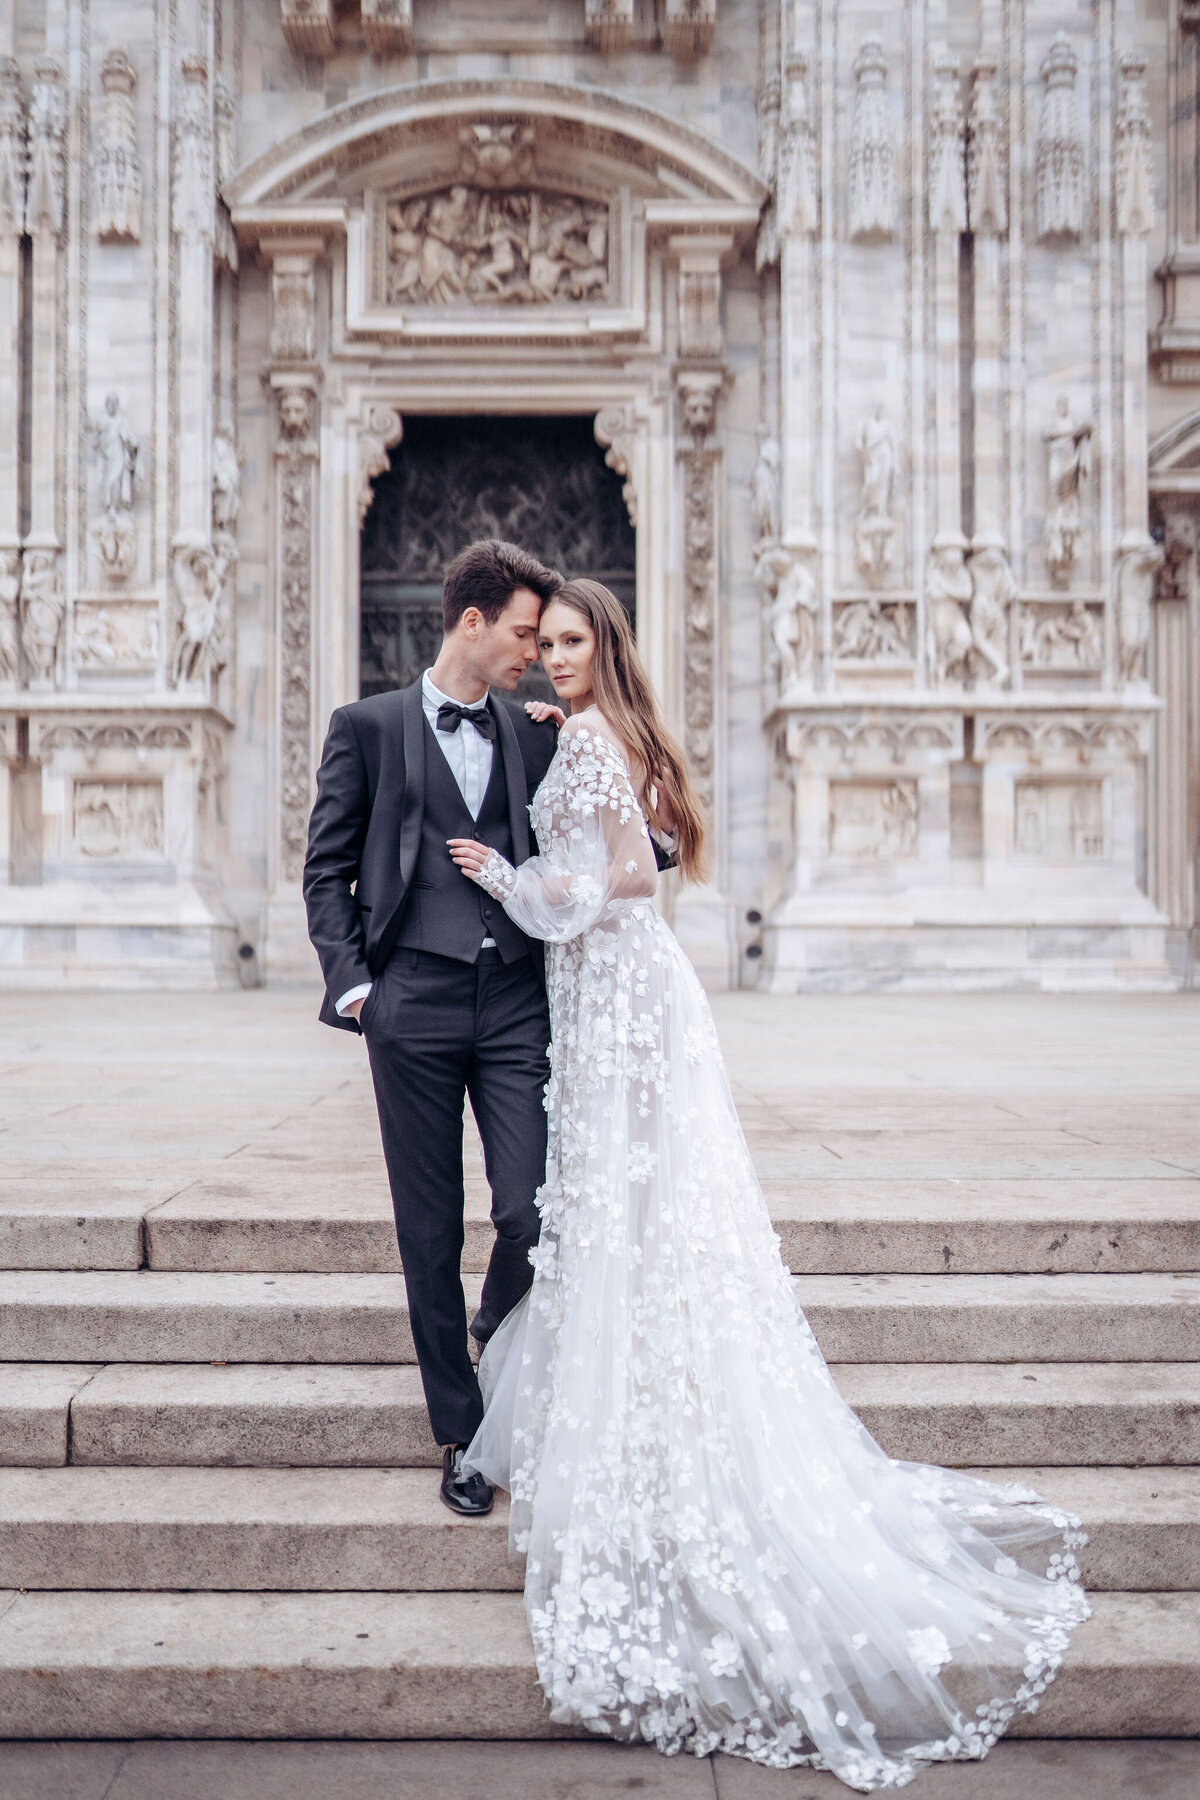 051-Milan-Duomo-Inspiration-Love-Story Elopement-Cinematic-Romance-Destination-Wedding-Editorial-Luxury-Fine-Art-Lisa-Vigliotta-Photography